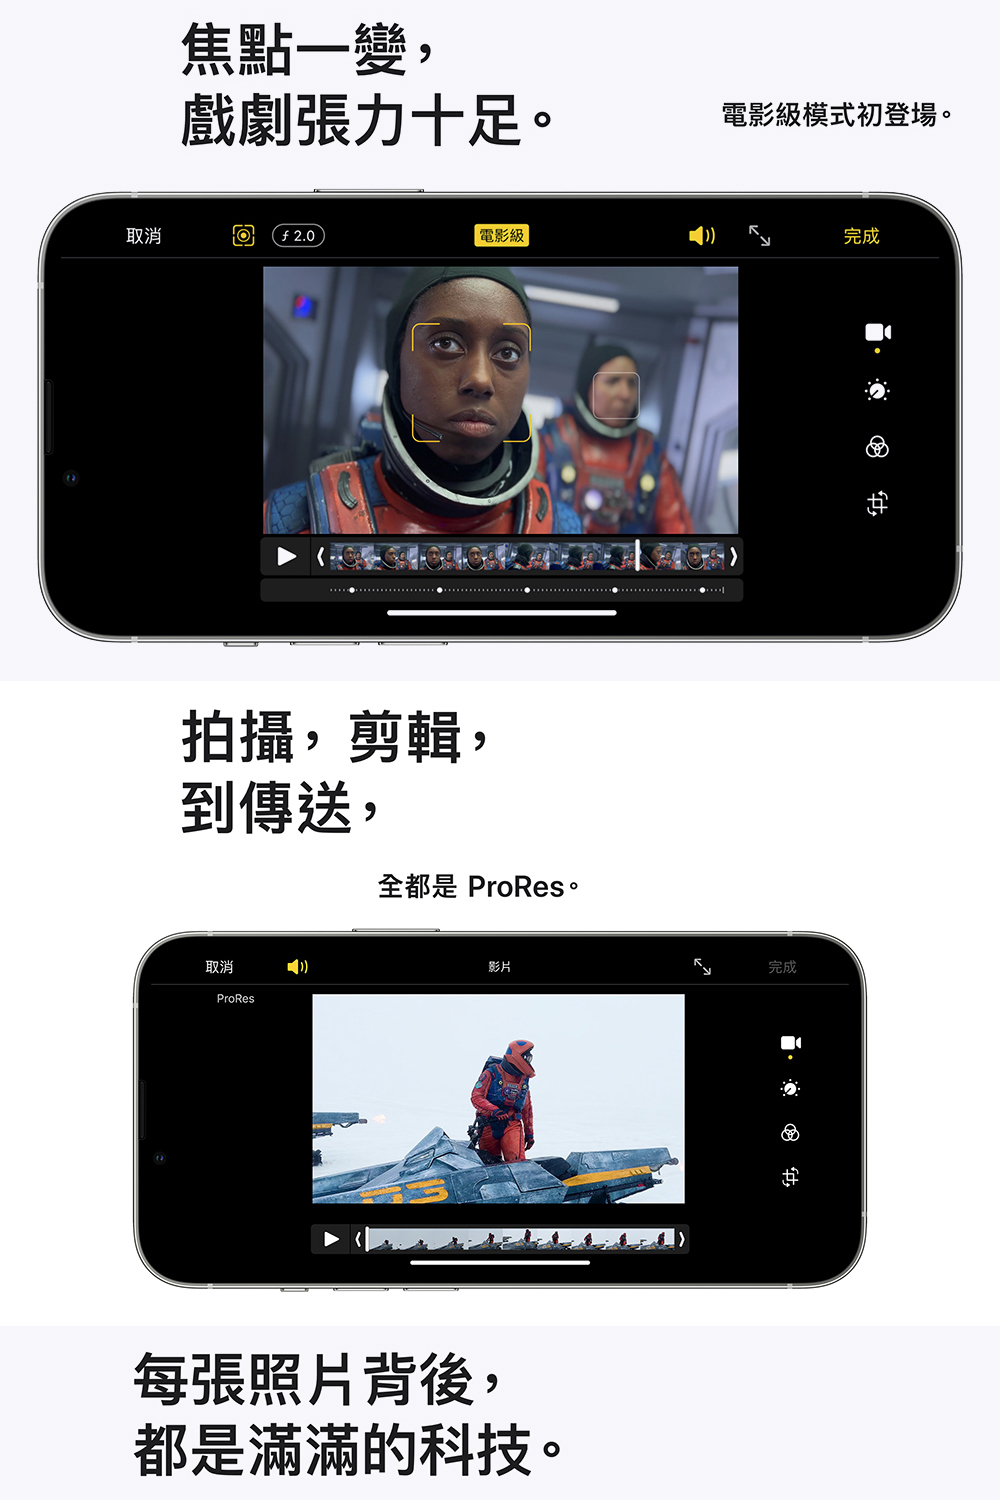 (A級福利品)【Apple】iPhone13 Pro Max 256G 贈充電組